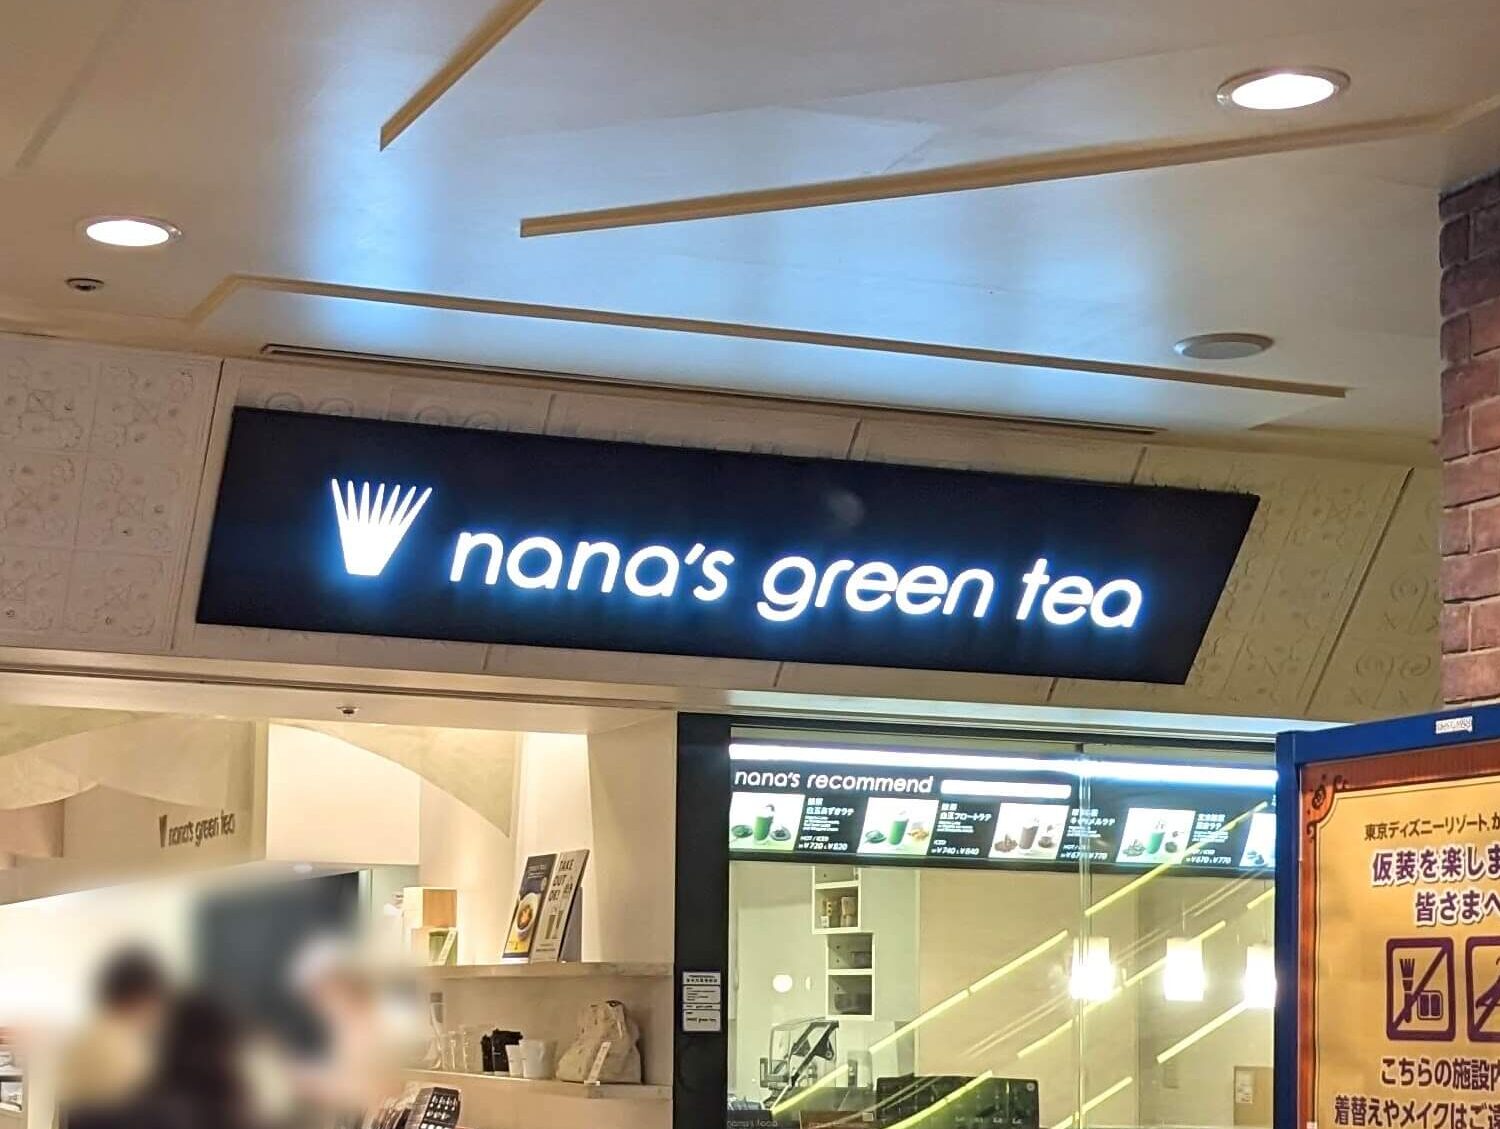 nana's green tea(ナナズグリーンティー)抹茶チーズケーキ (10)